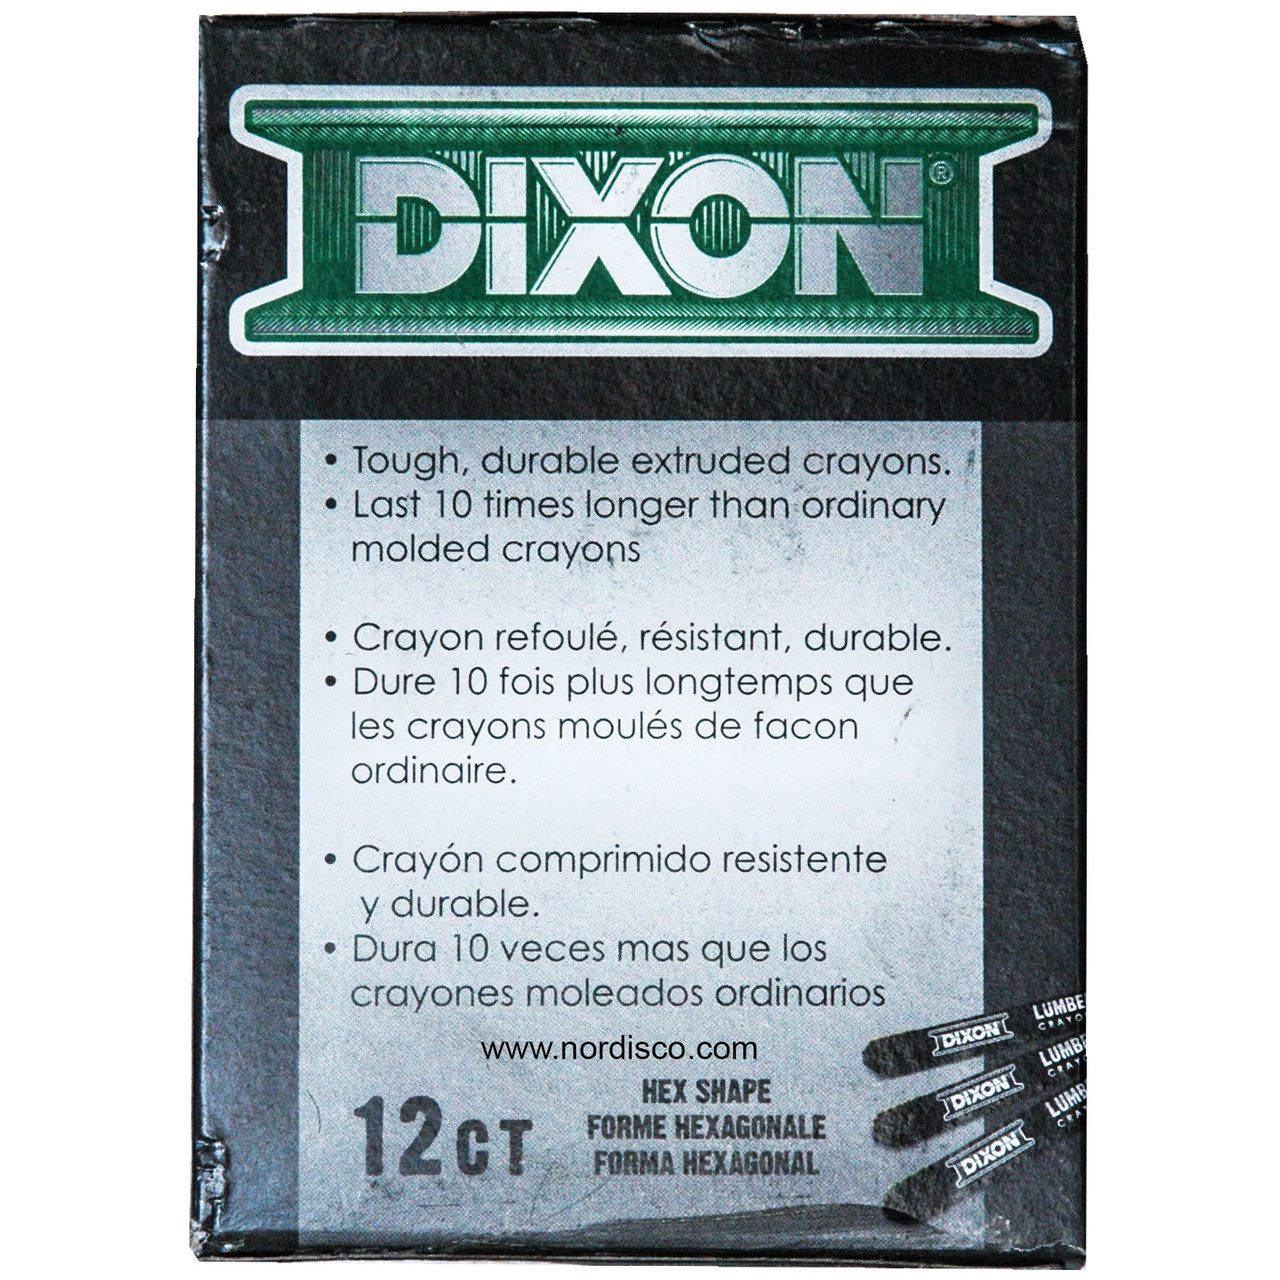 Dixon 52000 Red Lumber Crayons (12/box)